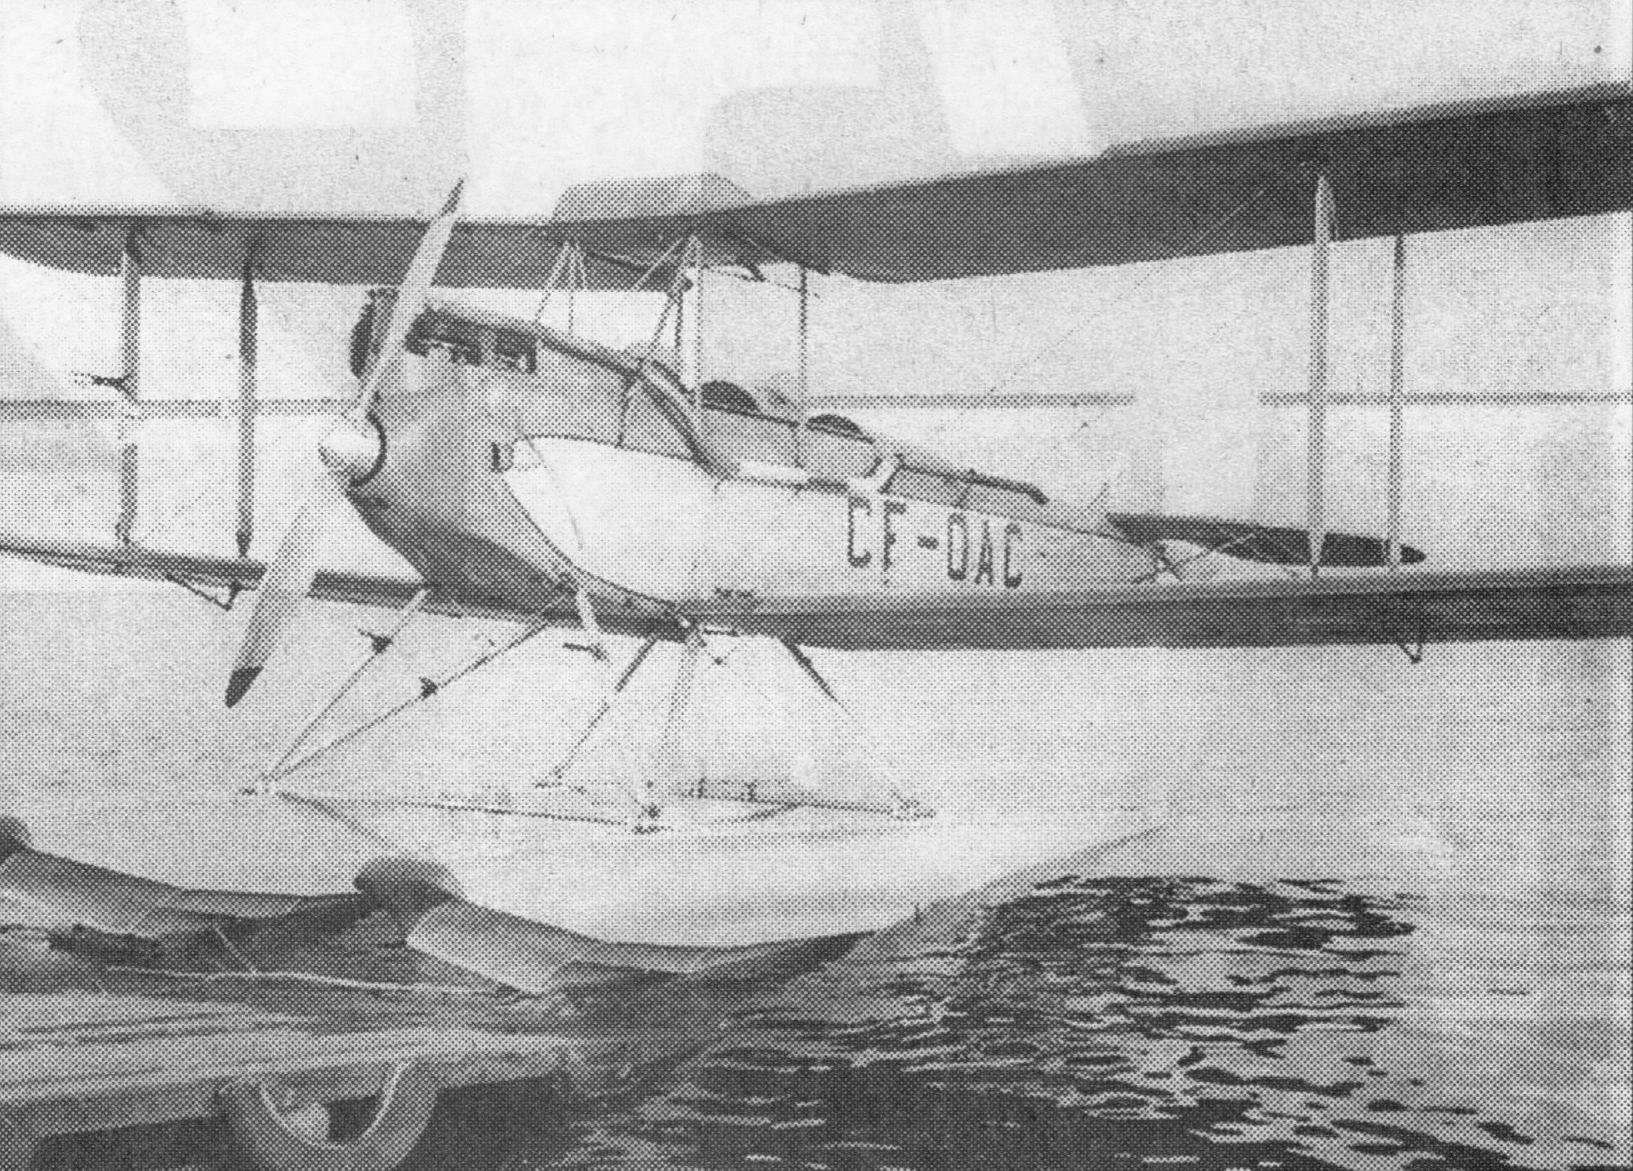 Float plane CF-OAC